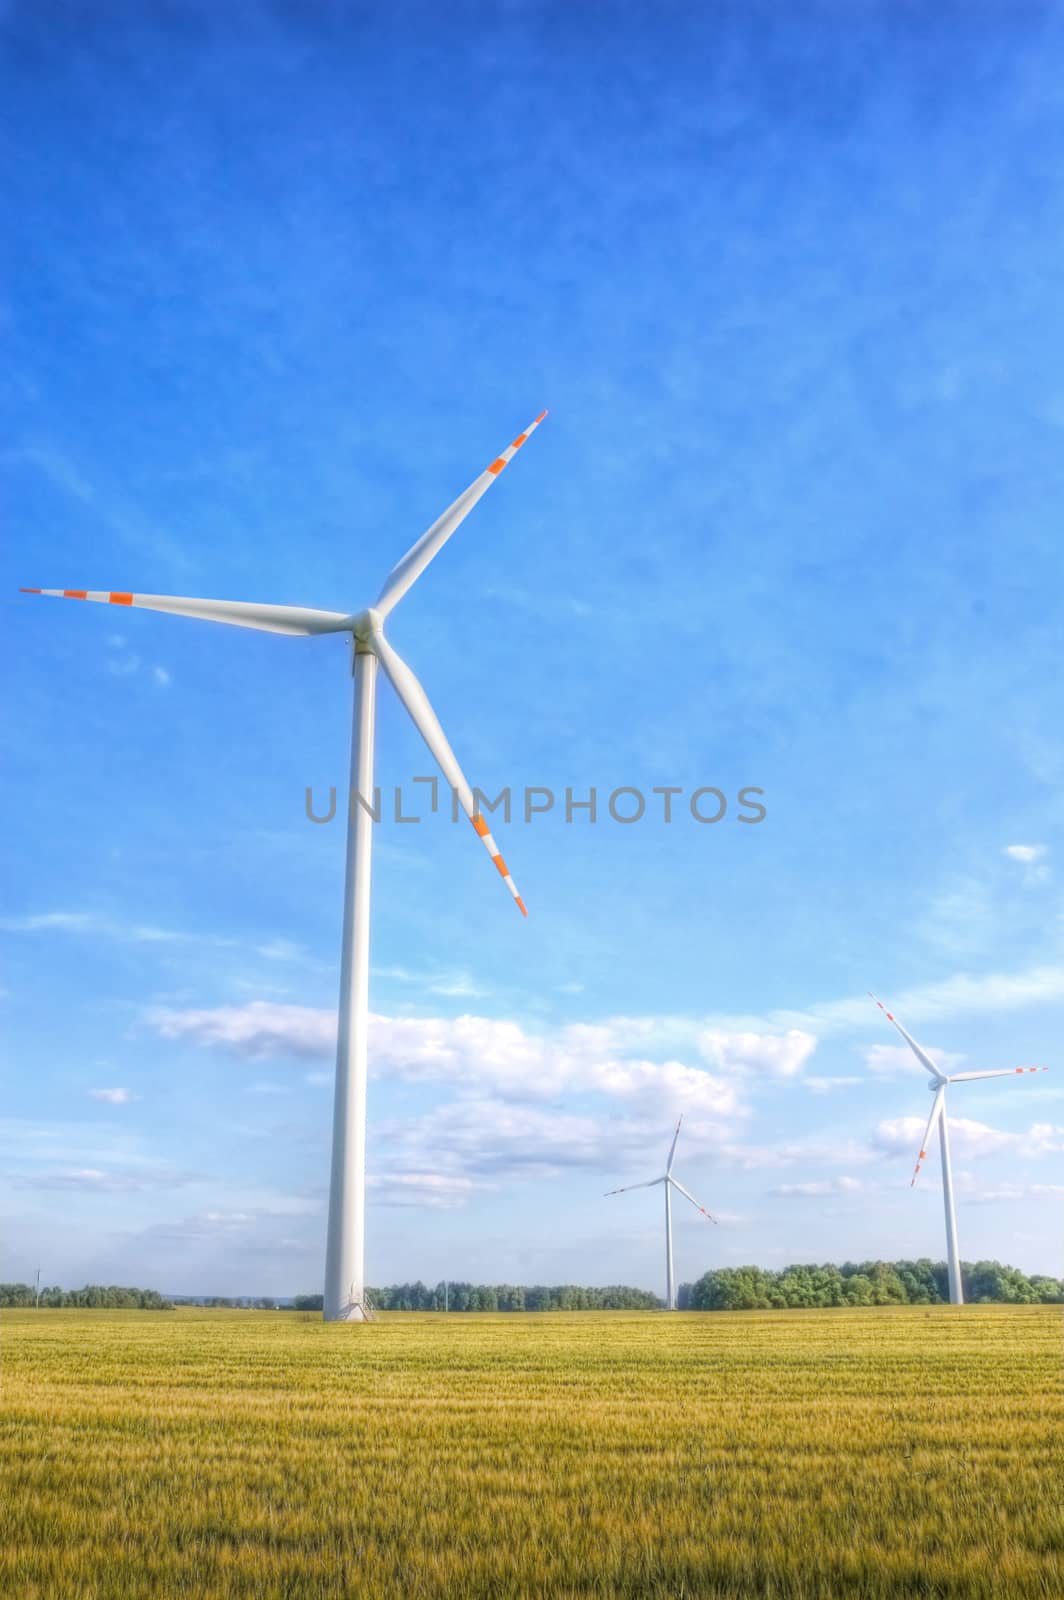 Windmill conceptual image. Windmills on the green field.